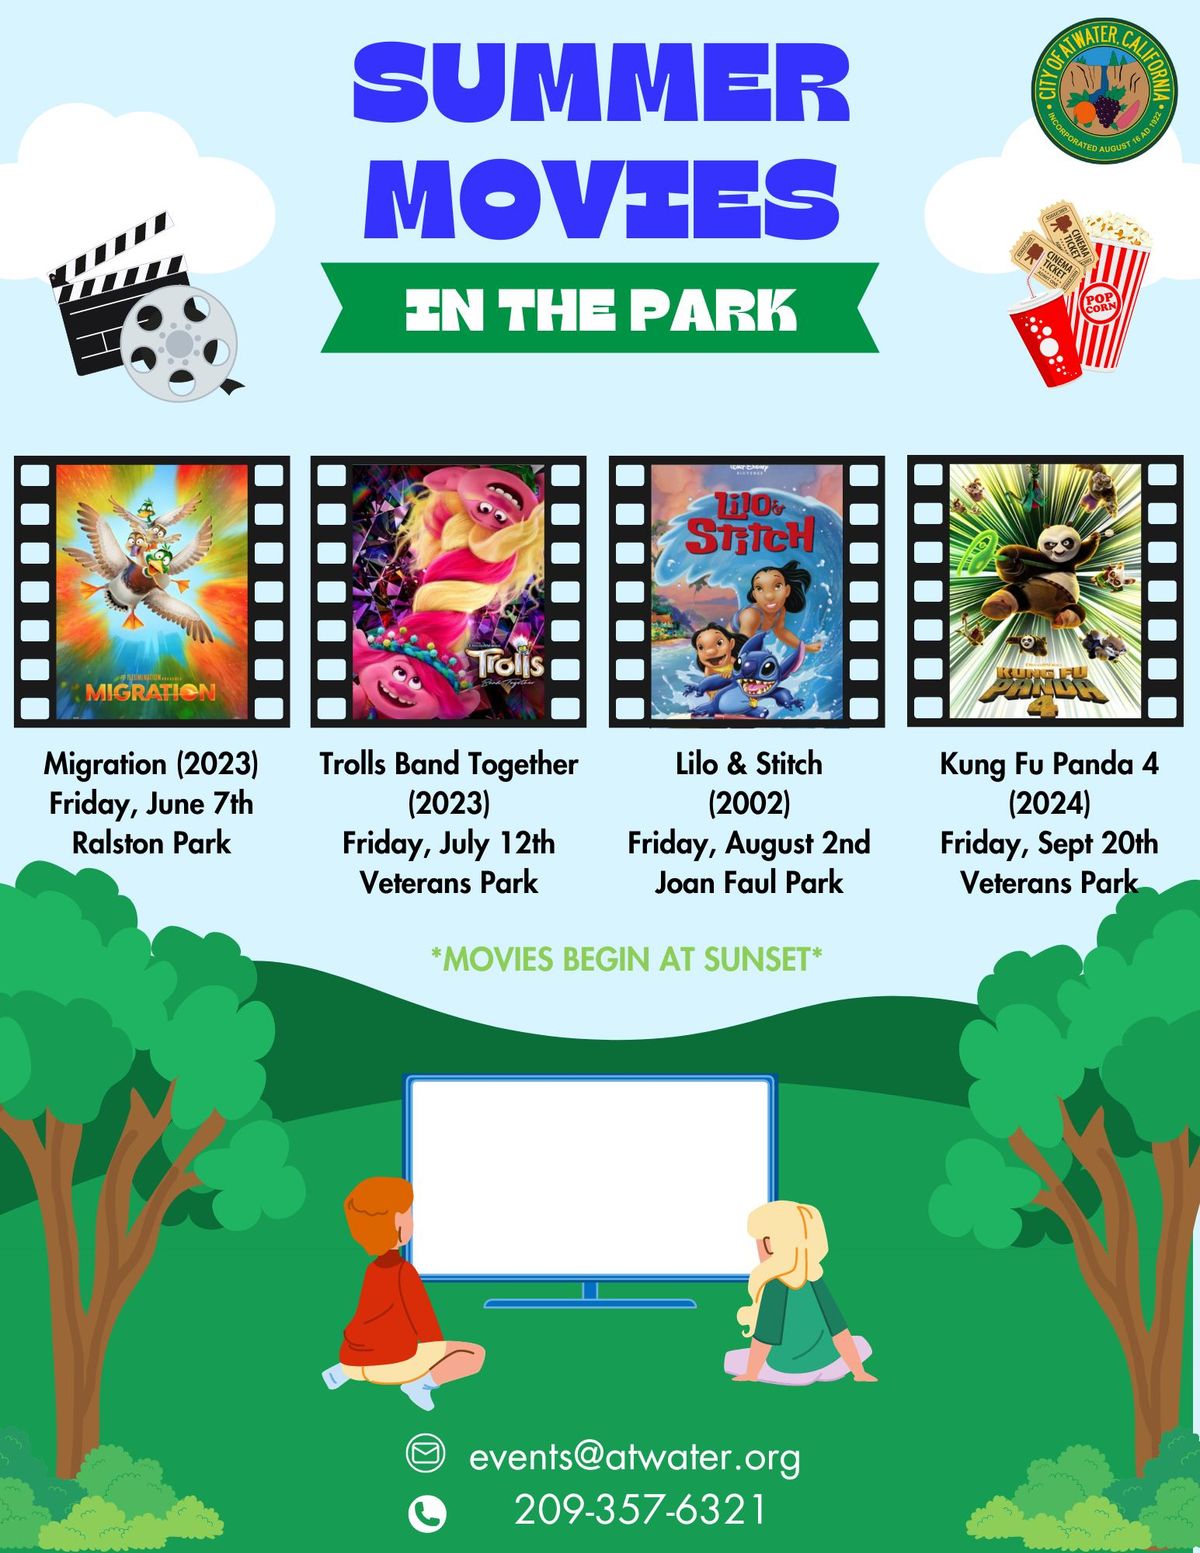 Movie in the Park (Lilo and Stitch)